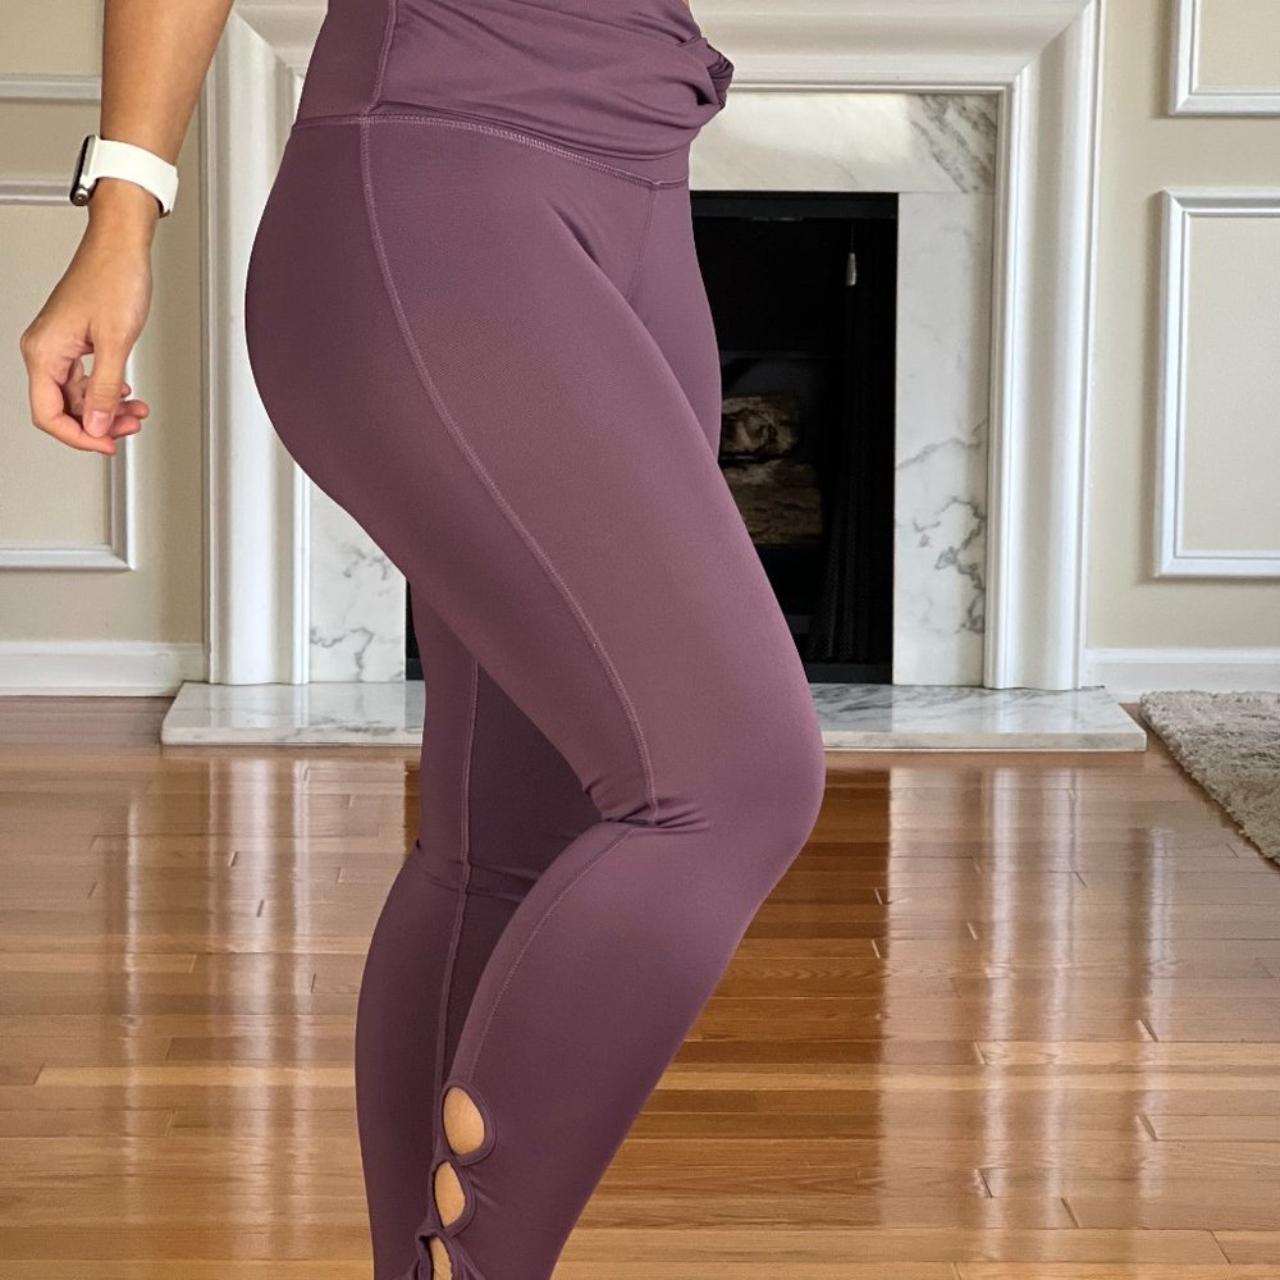 Kyodan purple athletic leggings •Size:medium - Depop